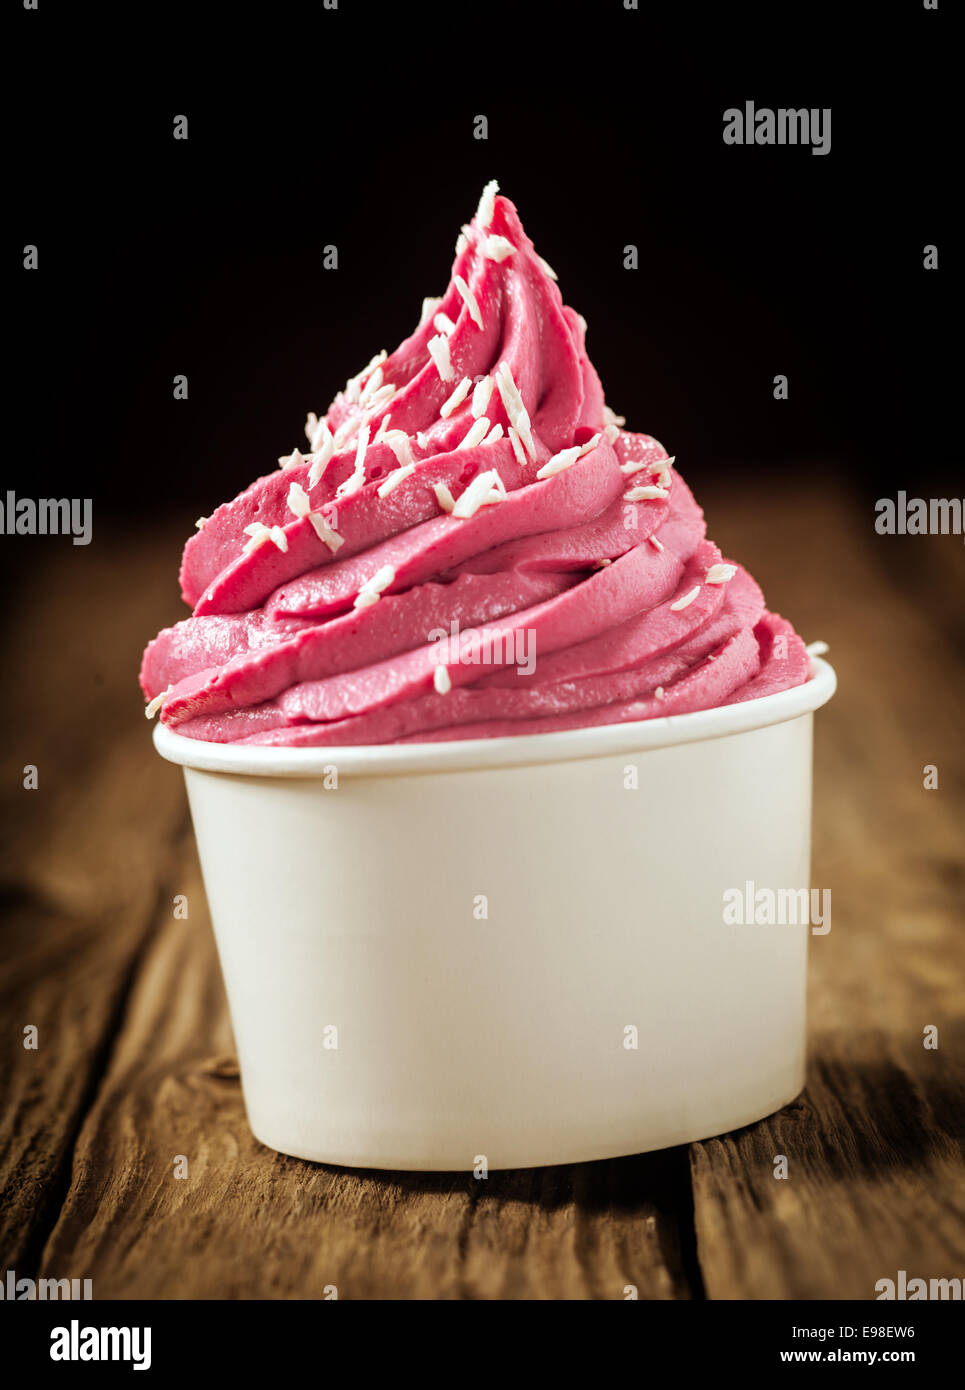 https://c8.alamy.com/comp/E98EW6/twirl-of-delicious-berry-ice-cream-or-frozen-yoghurt-in-a-plastic-E98EW6.jpg